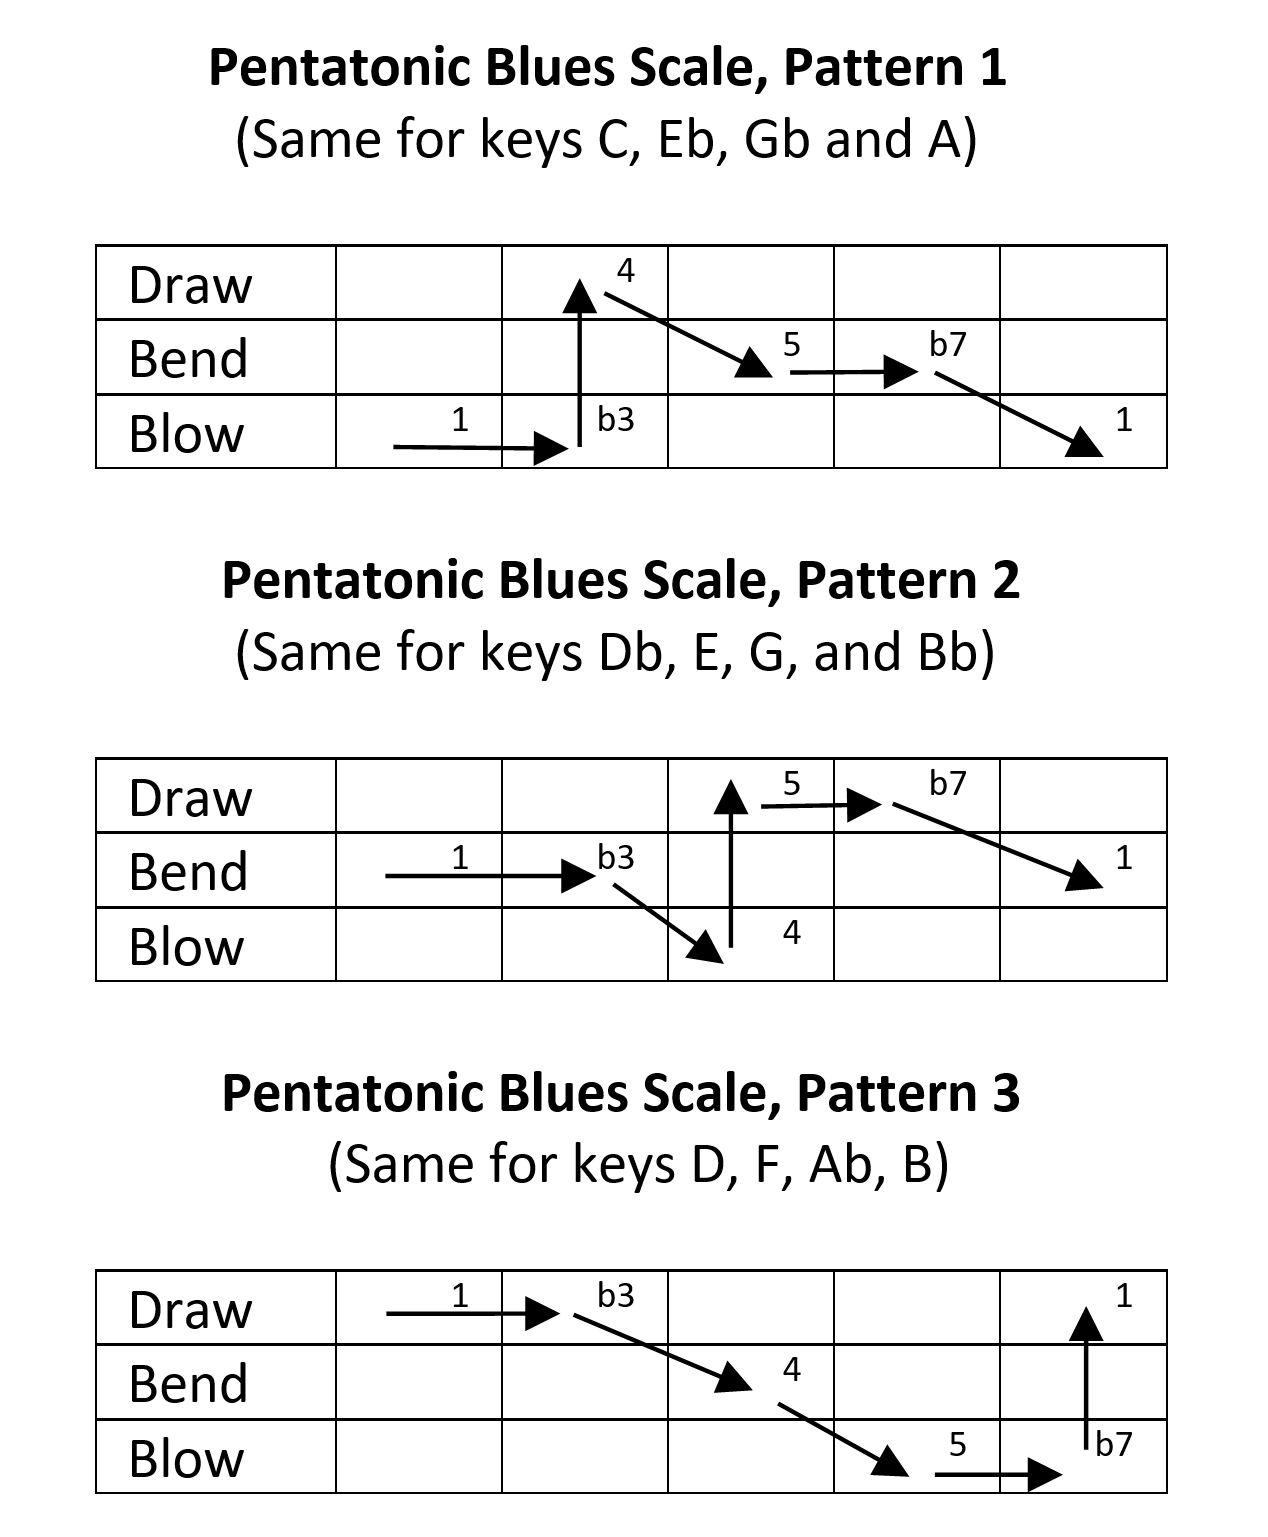 L13_Dim_Blues_Scale_Patterns.png